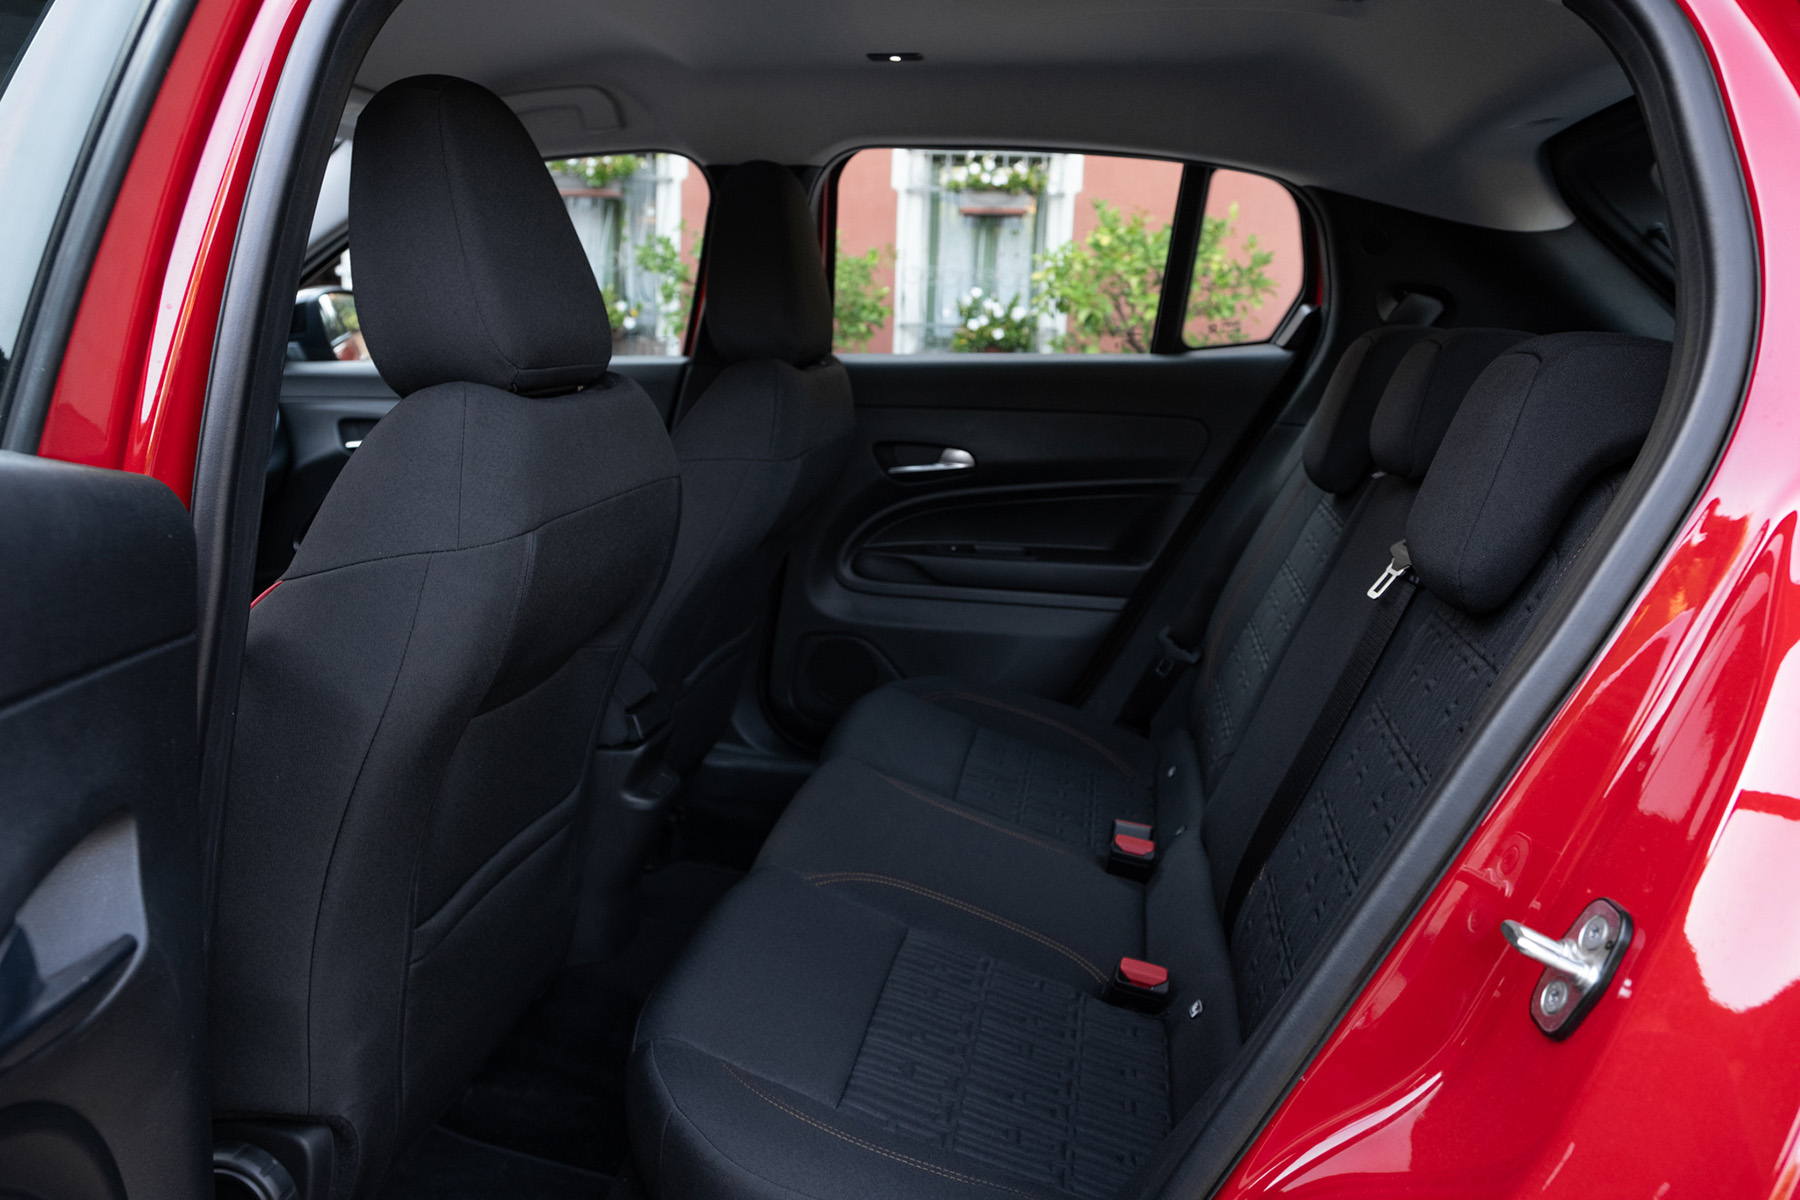 Fiat 600e rear interior view | Expert Rating